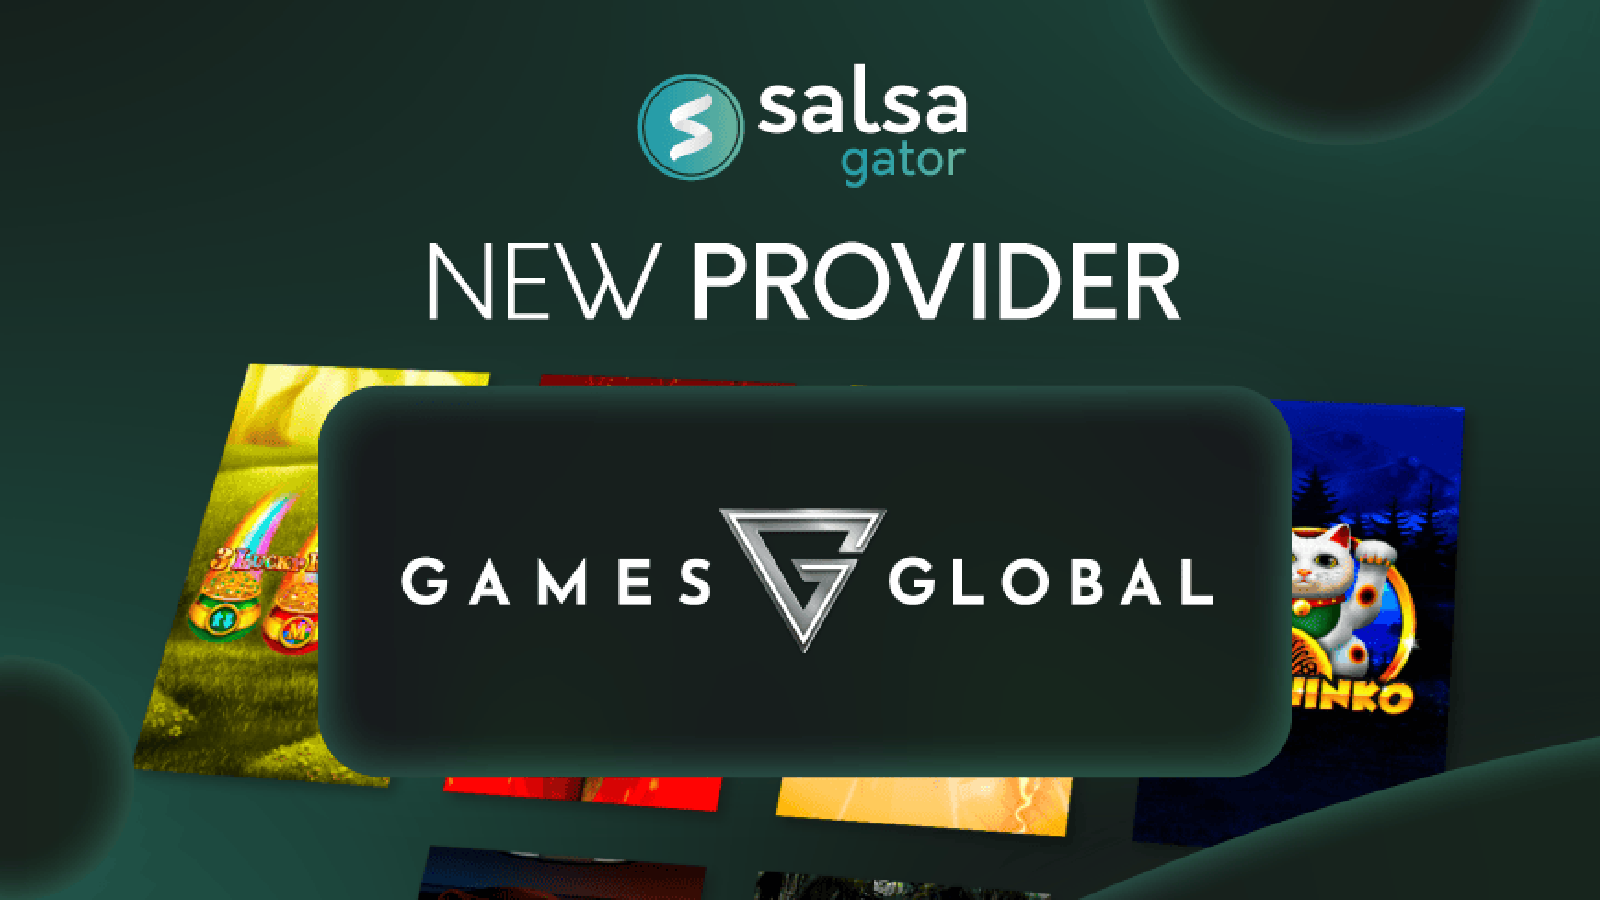 Salsa Technology Expands its Gaming Portfolio